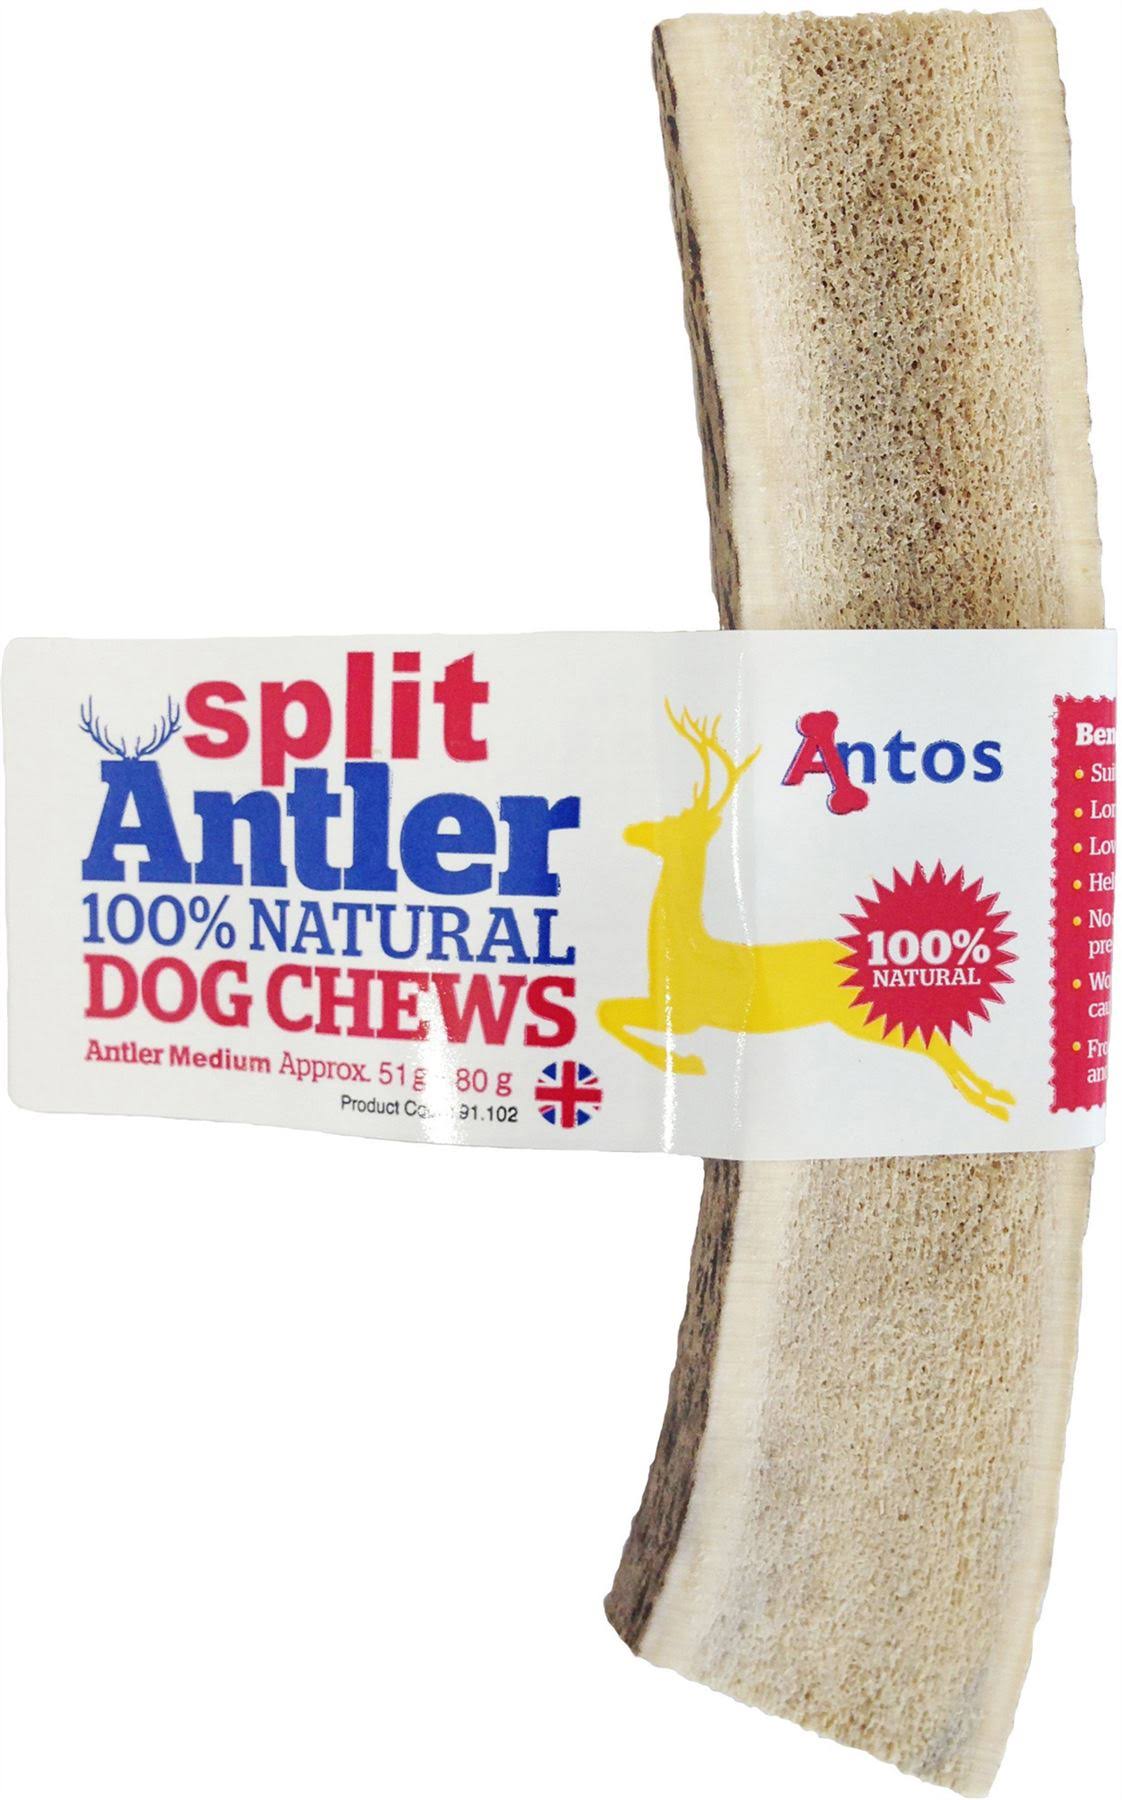 Antos Split Antler 100 Natural Dog Chew - Medium, 51-80g